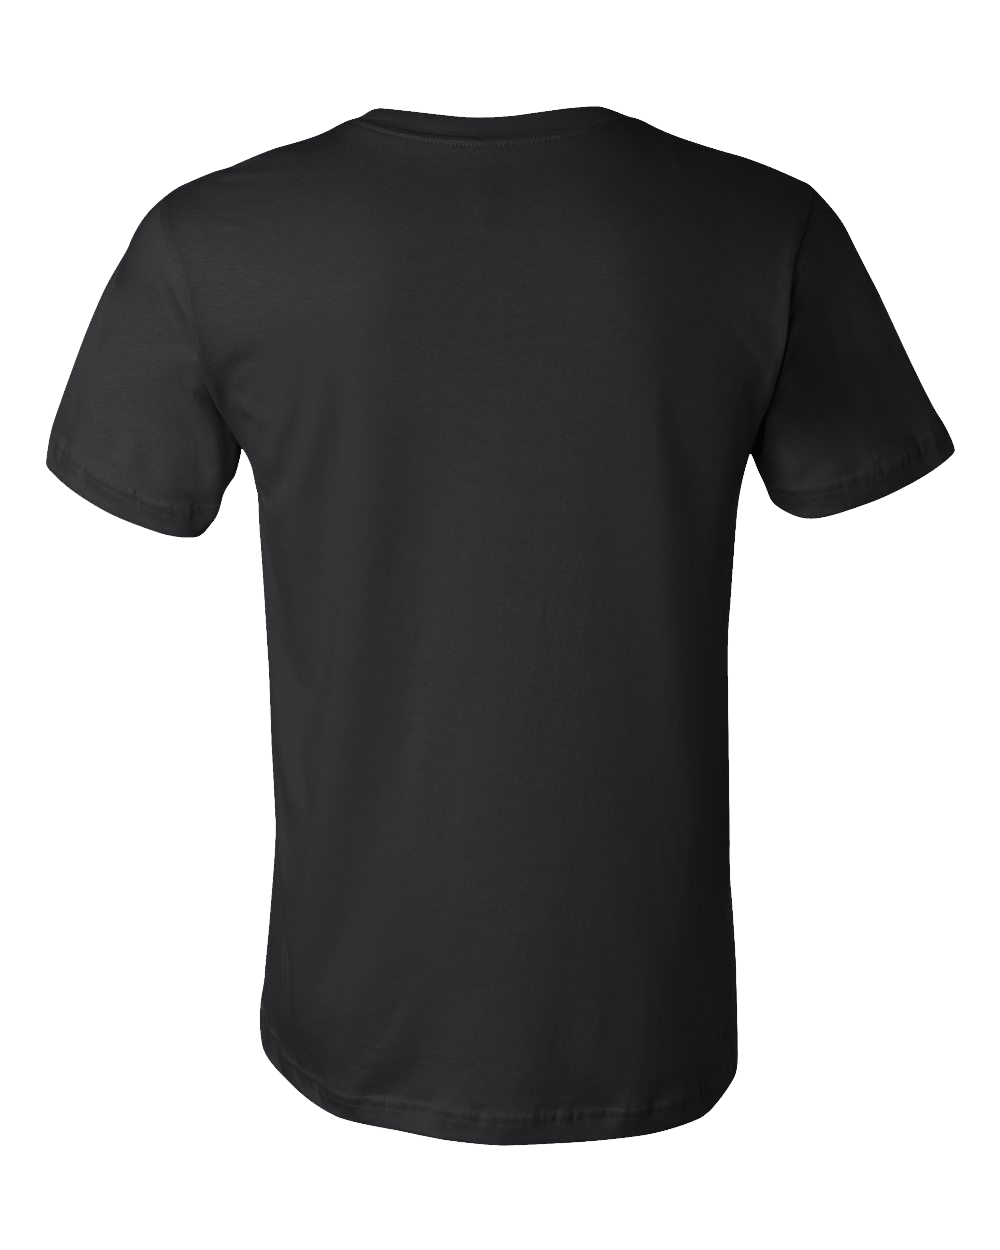 Standard Black Flagstaff, AZ | Retro, Vintage Style Arizona Pride  T-shirt